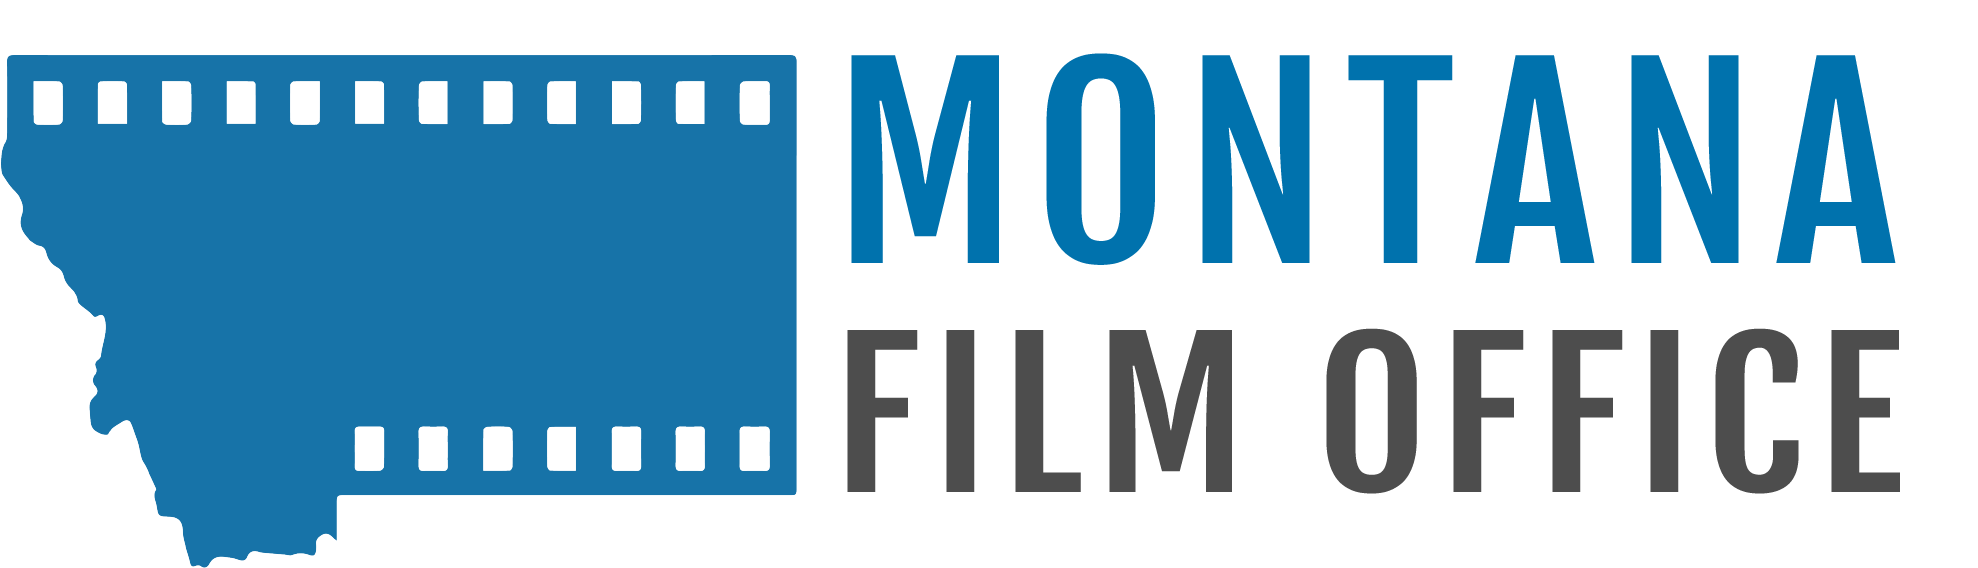 Montana Film Office - 